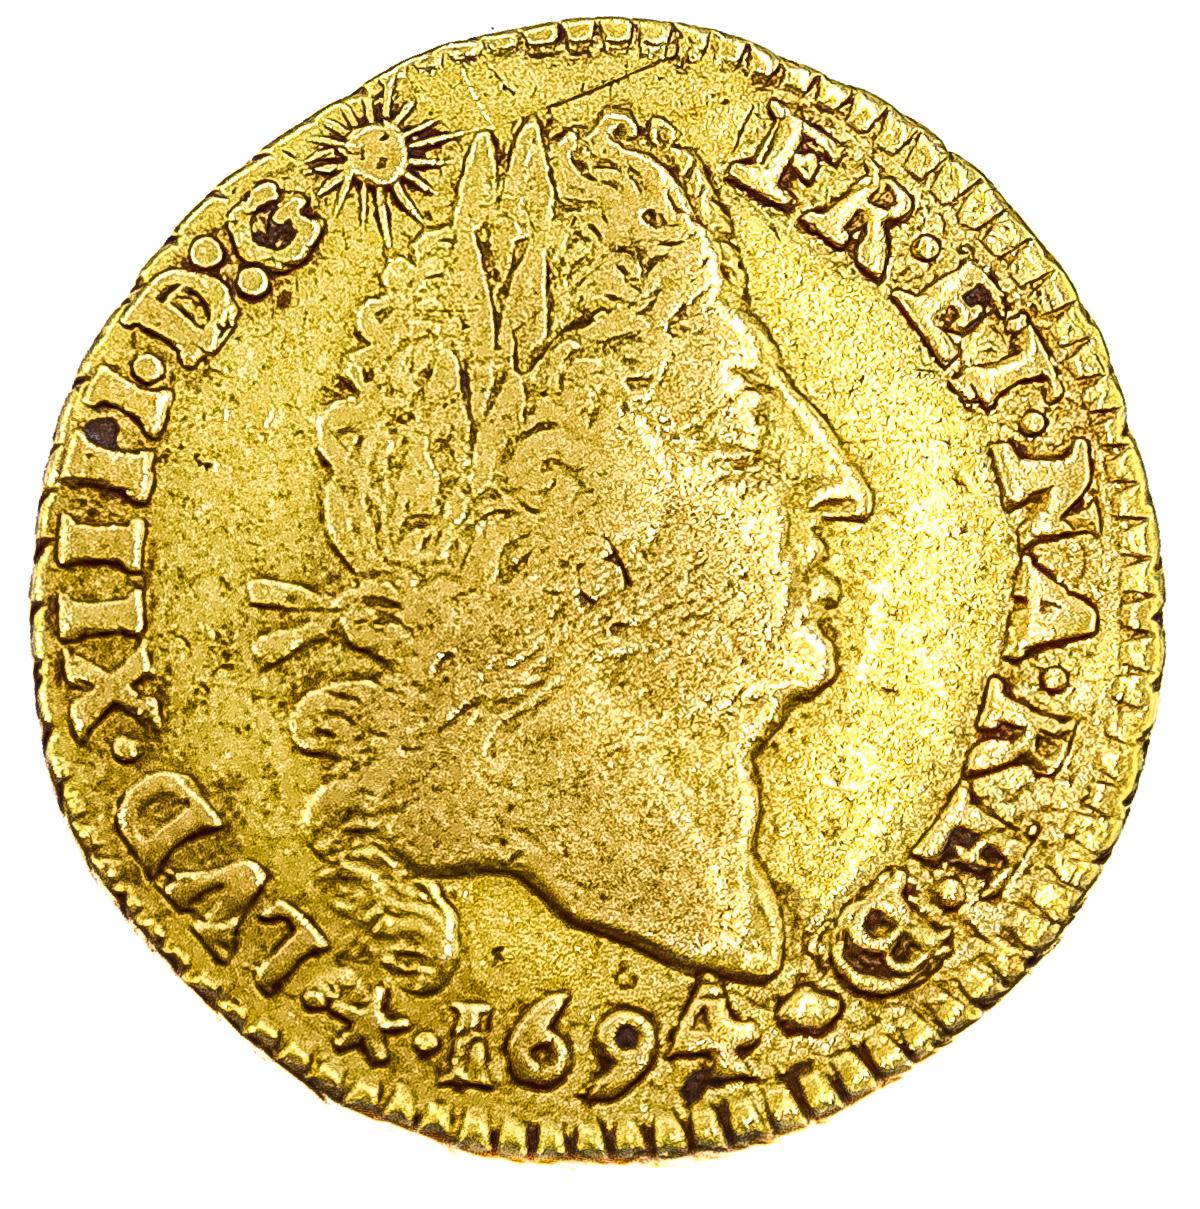 MONEDA DE ORO FRANCESA DE 1694